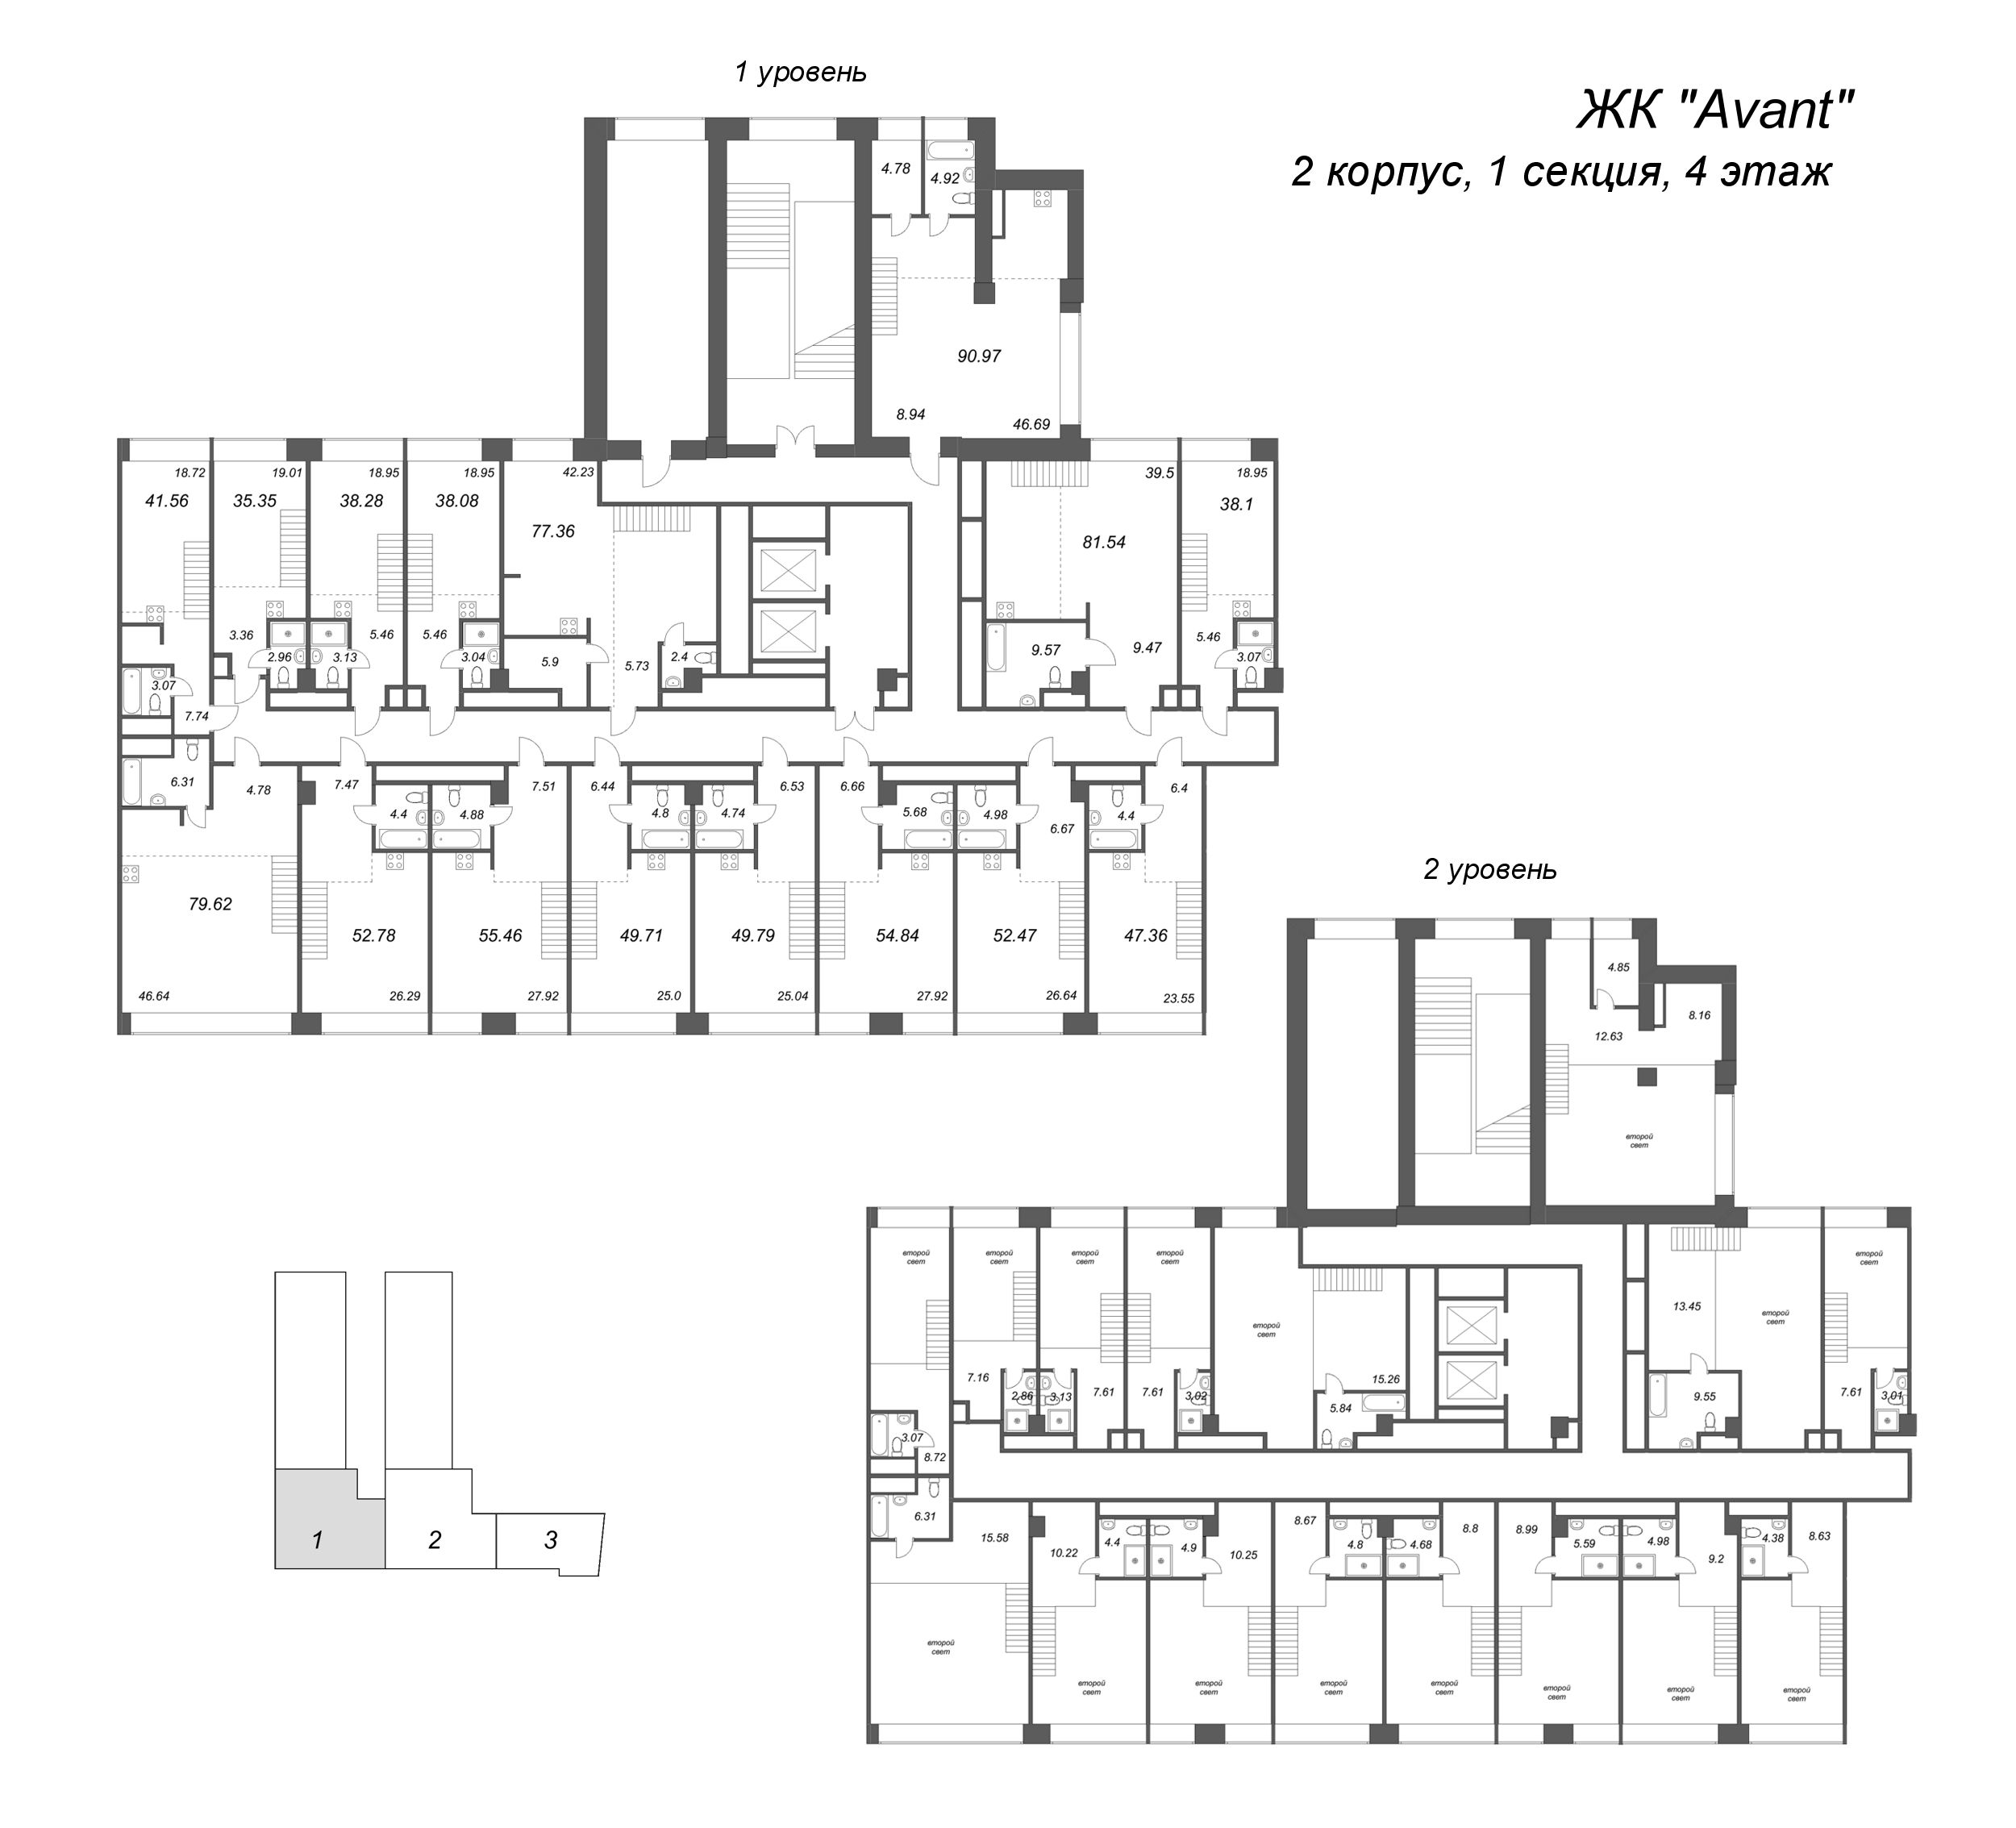 2-комнатная (Евро) квартира, 38.28 м² - планировка этажа